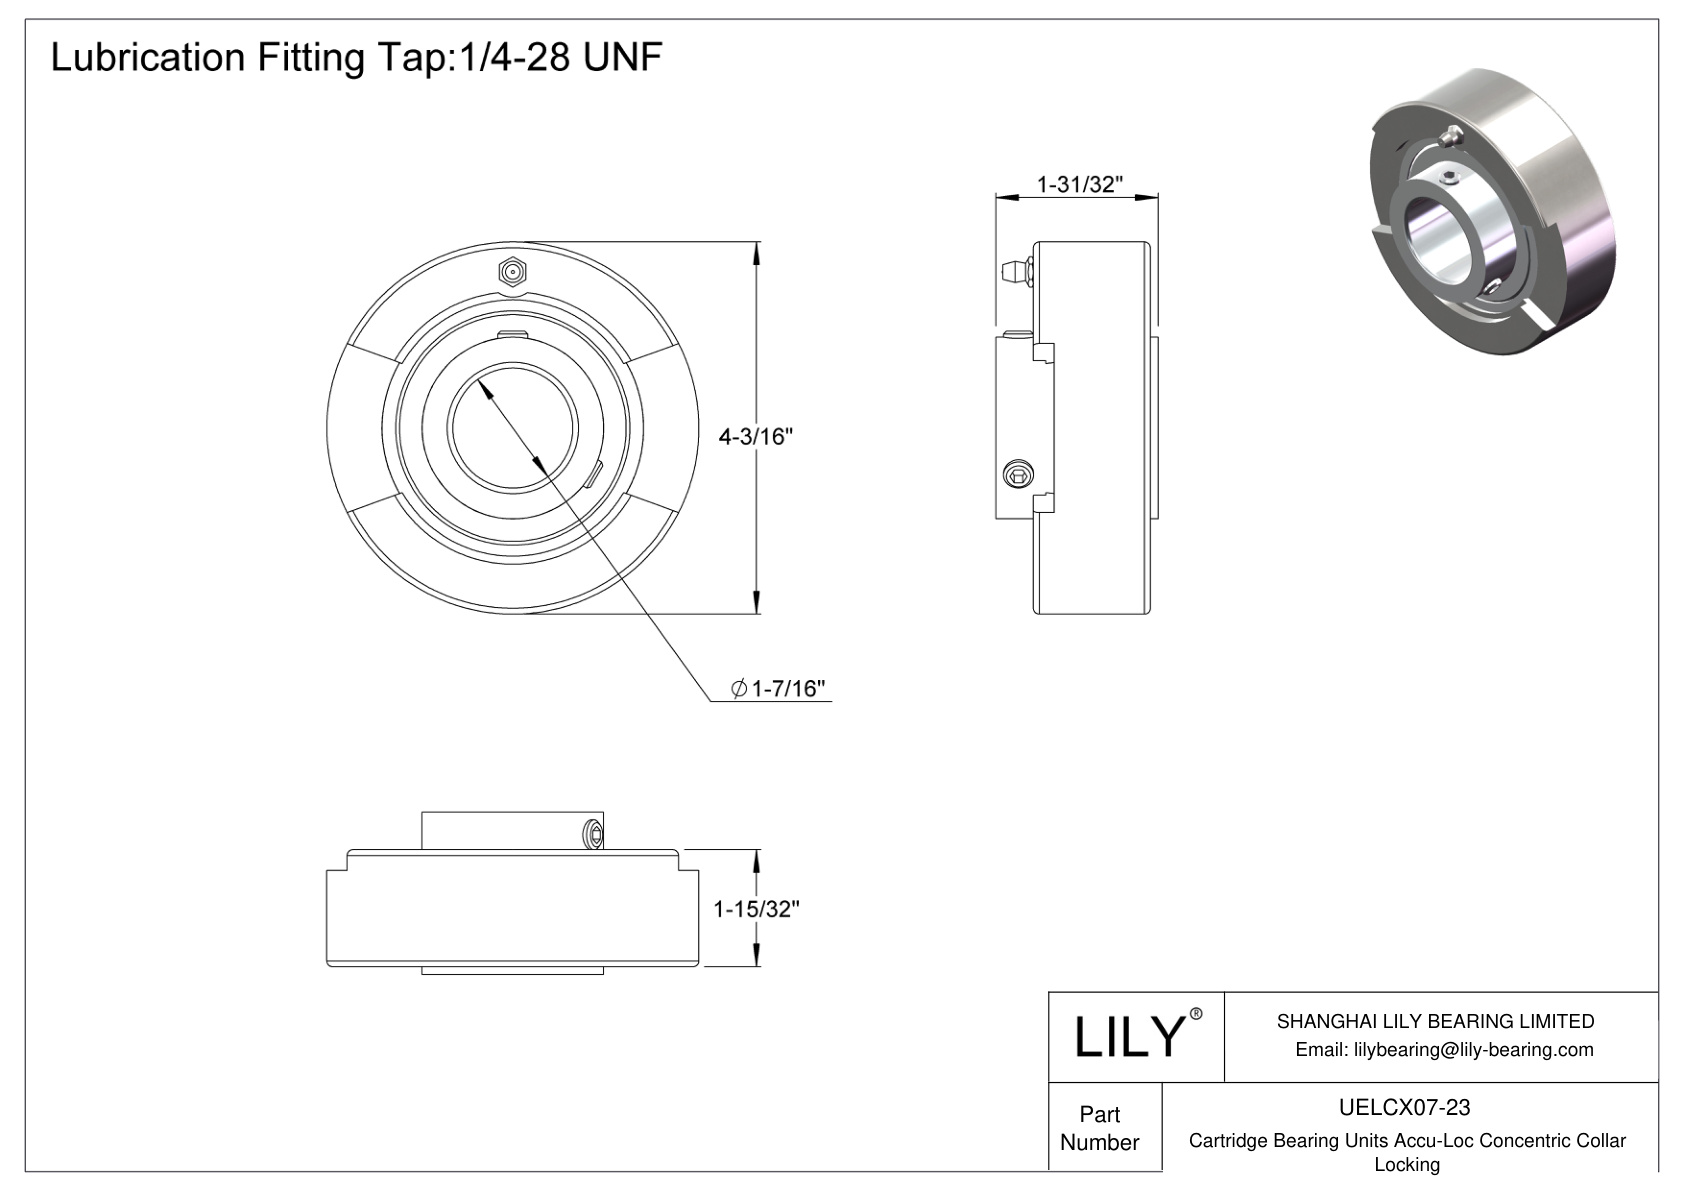 UELCX07-23 Cartridge Bearing Units Accu-Loc Concentric Collar Locking cad drawing